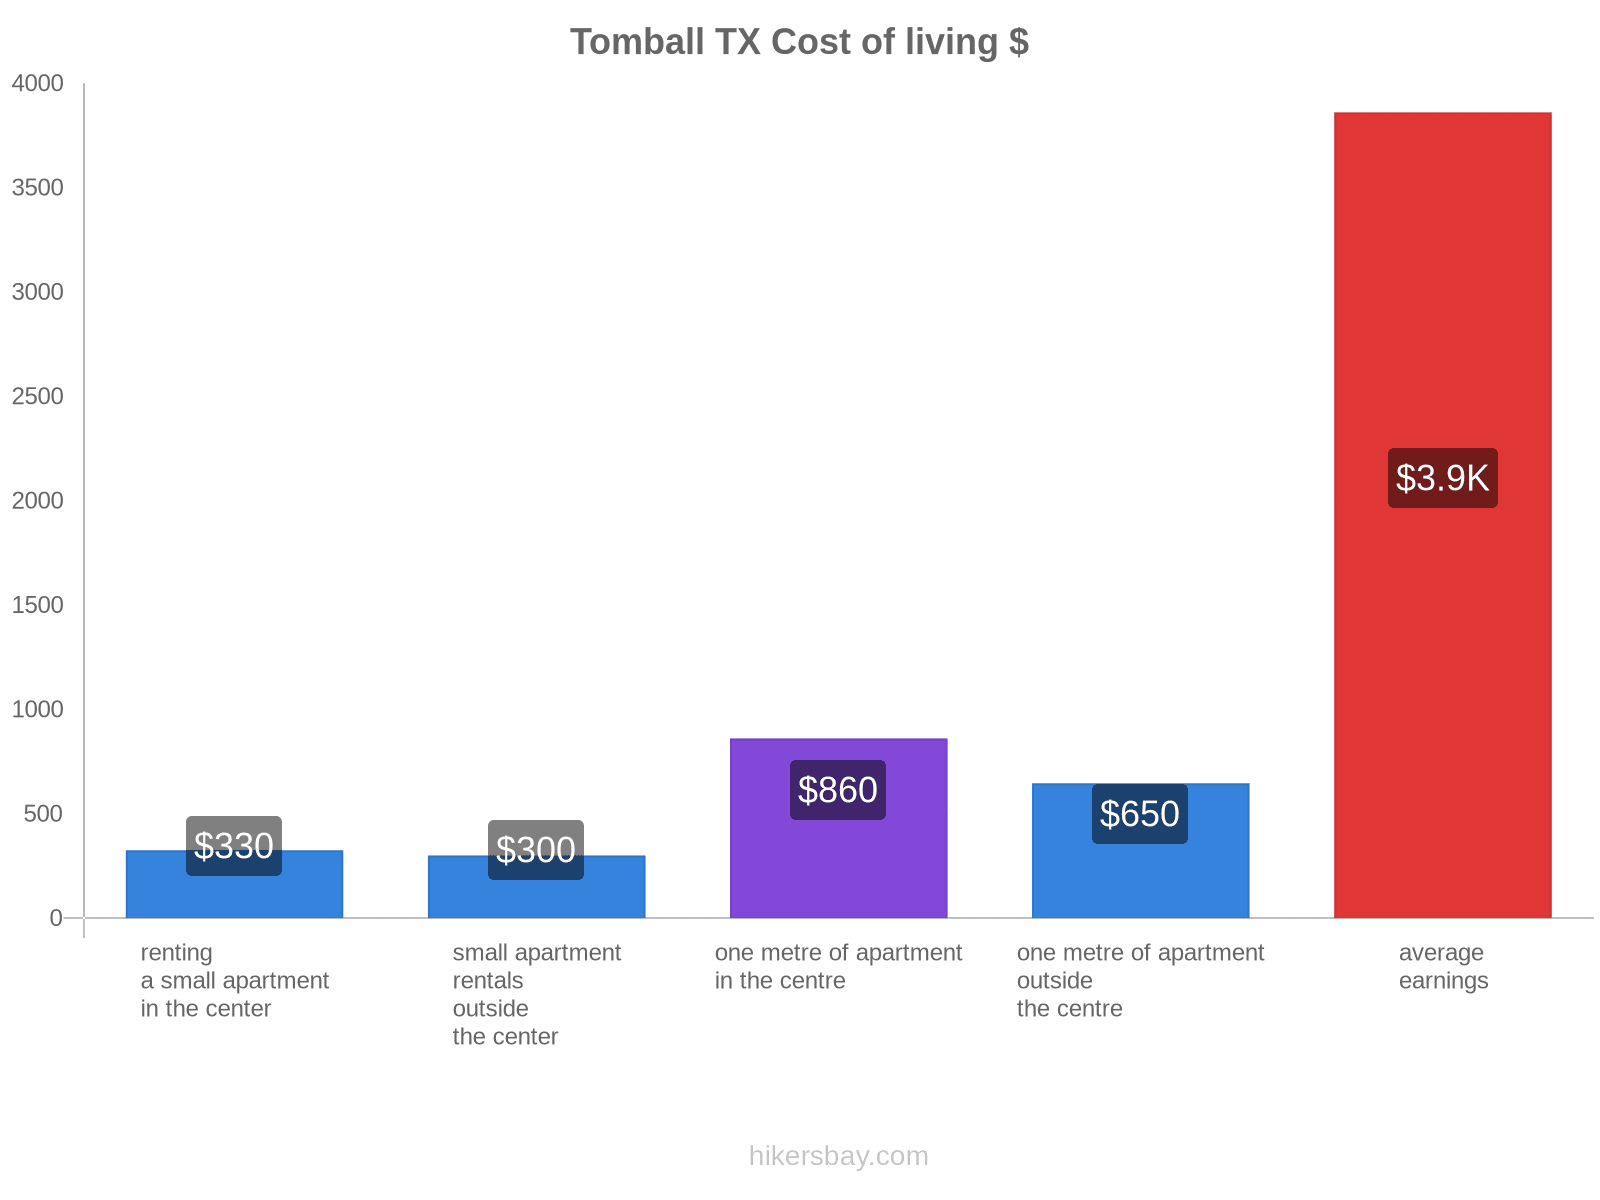 Tomball TX cost of living hikersbay.com